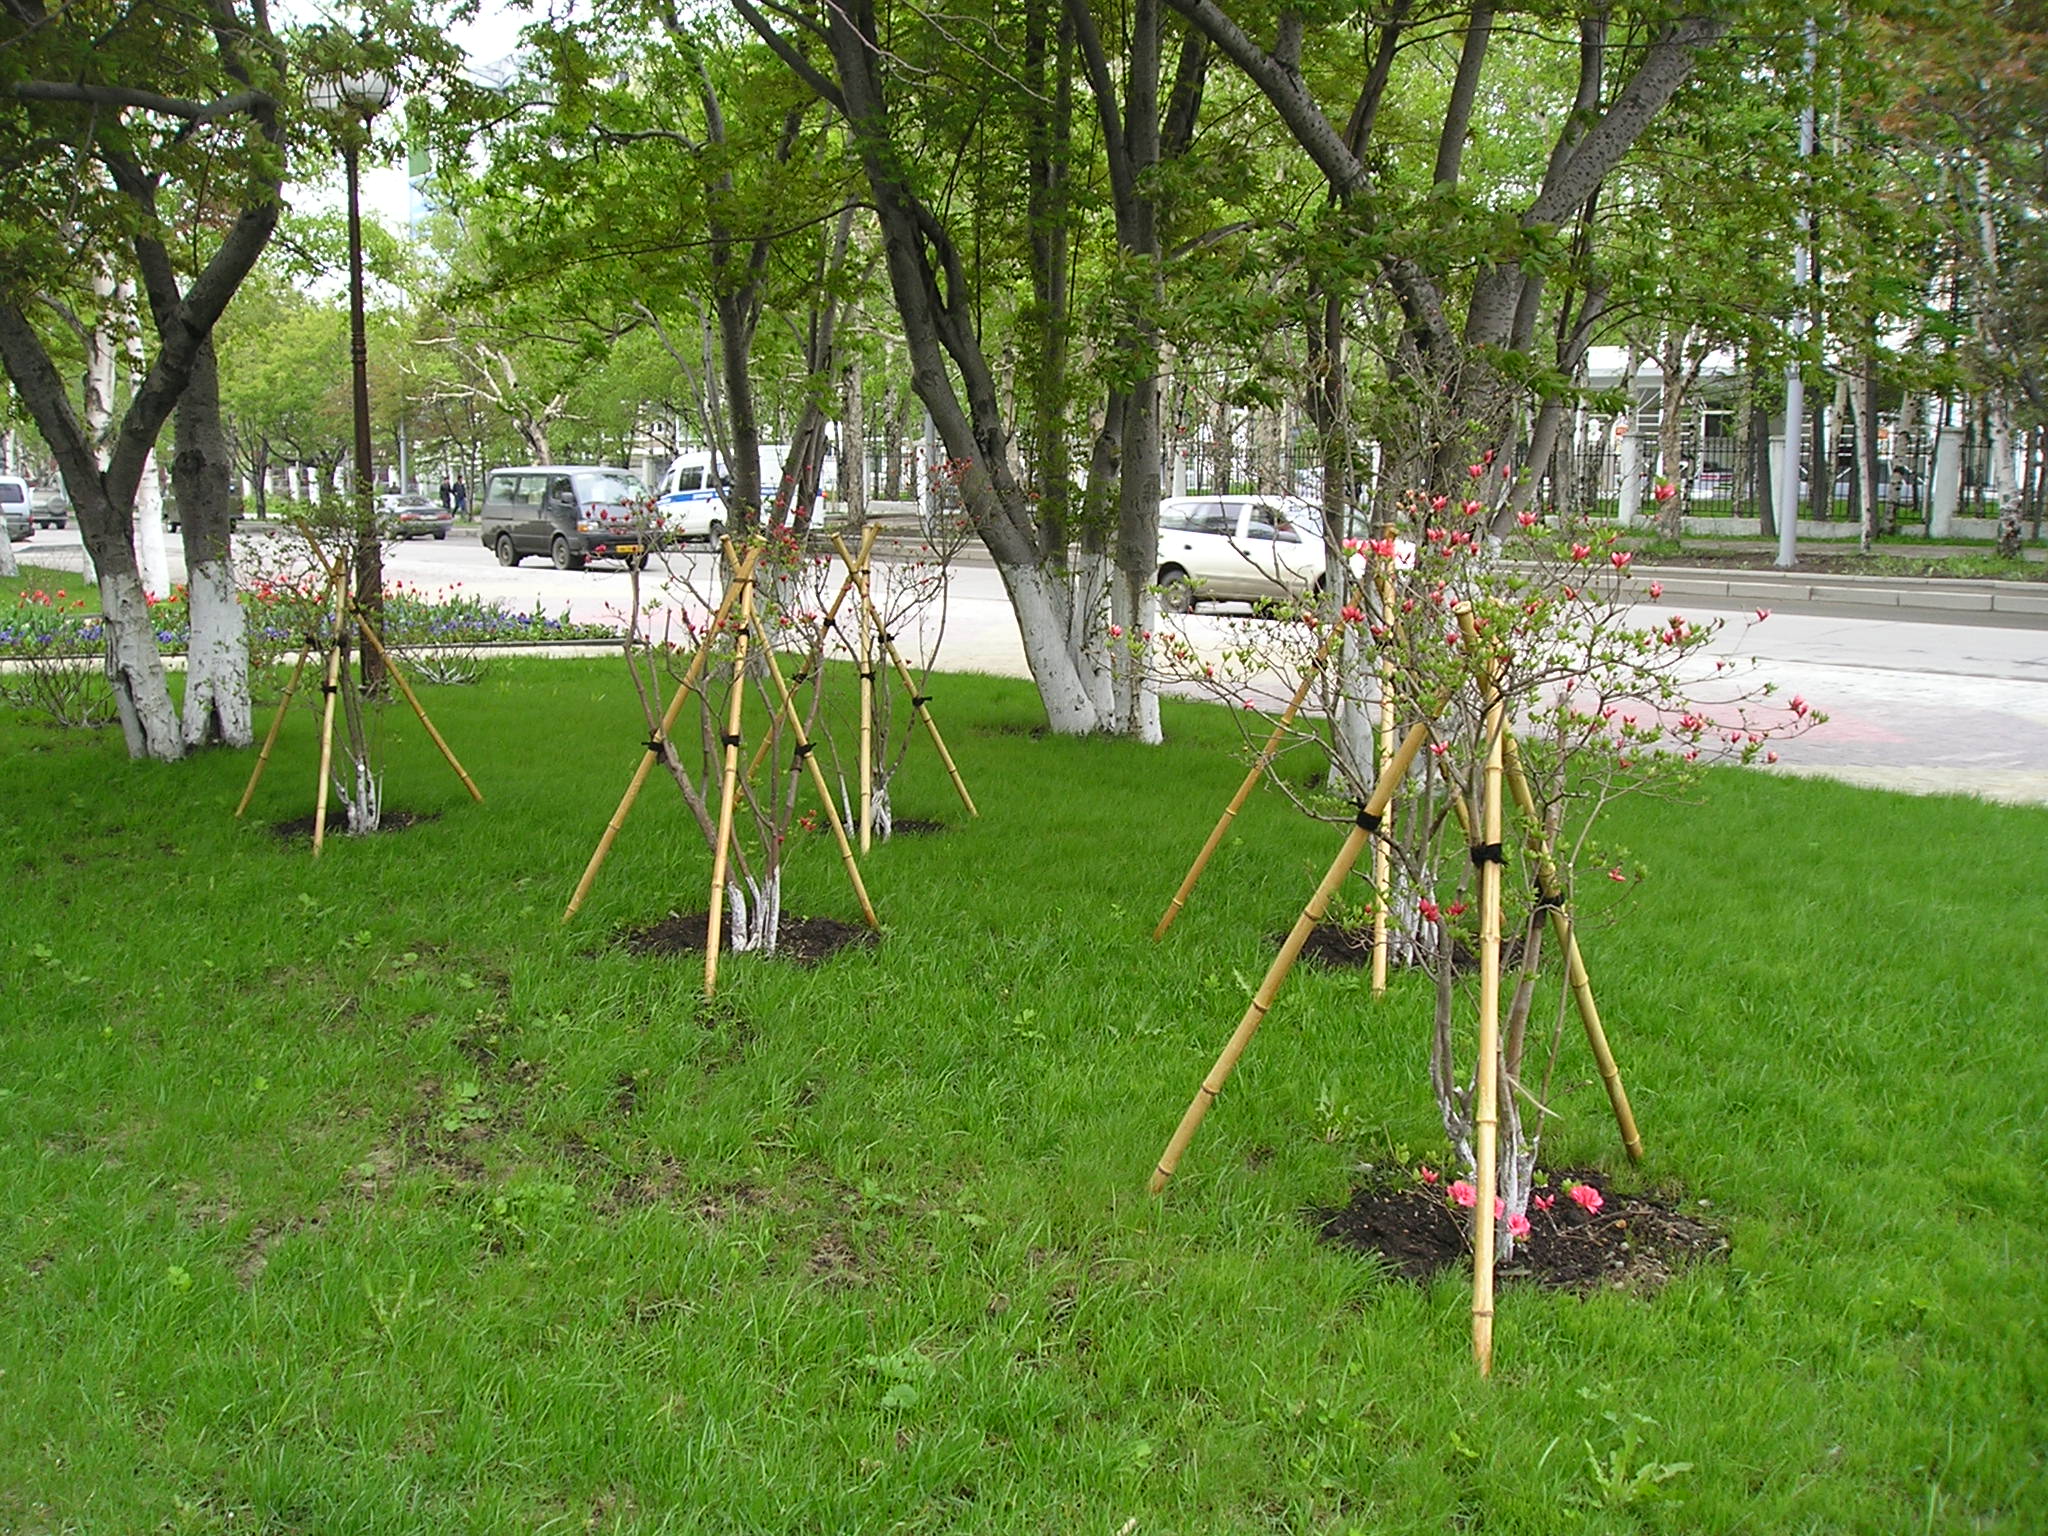 A commemorative tree-planting ceremony